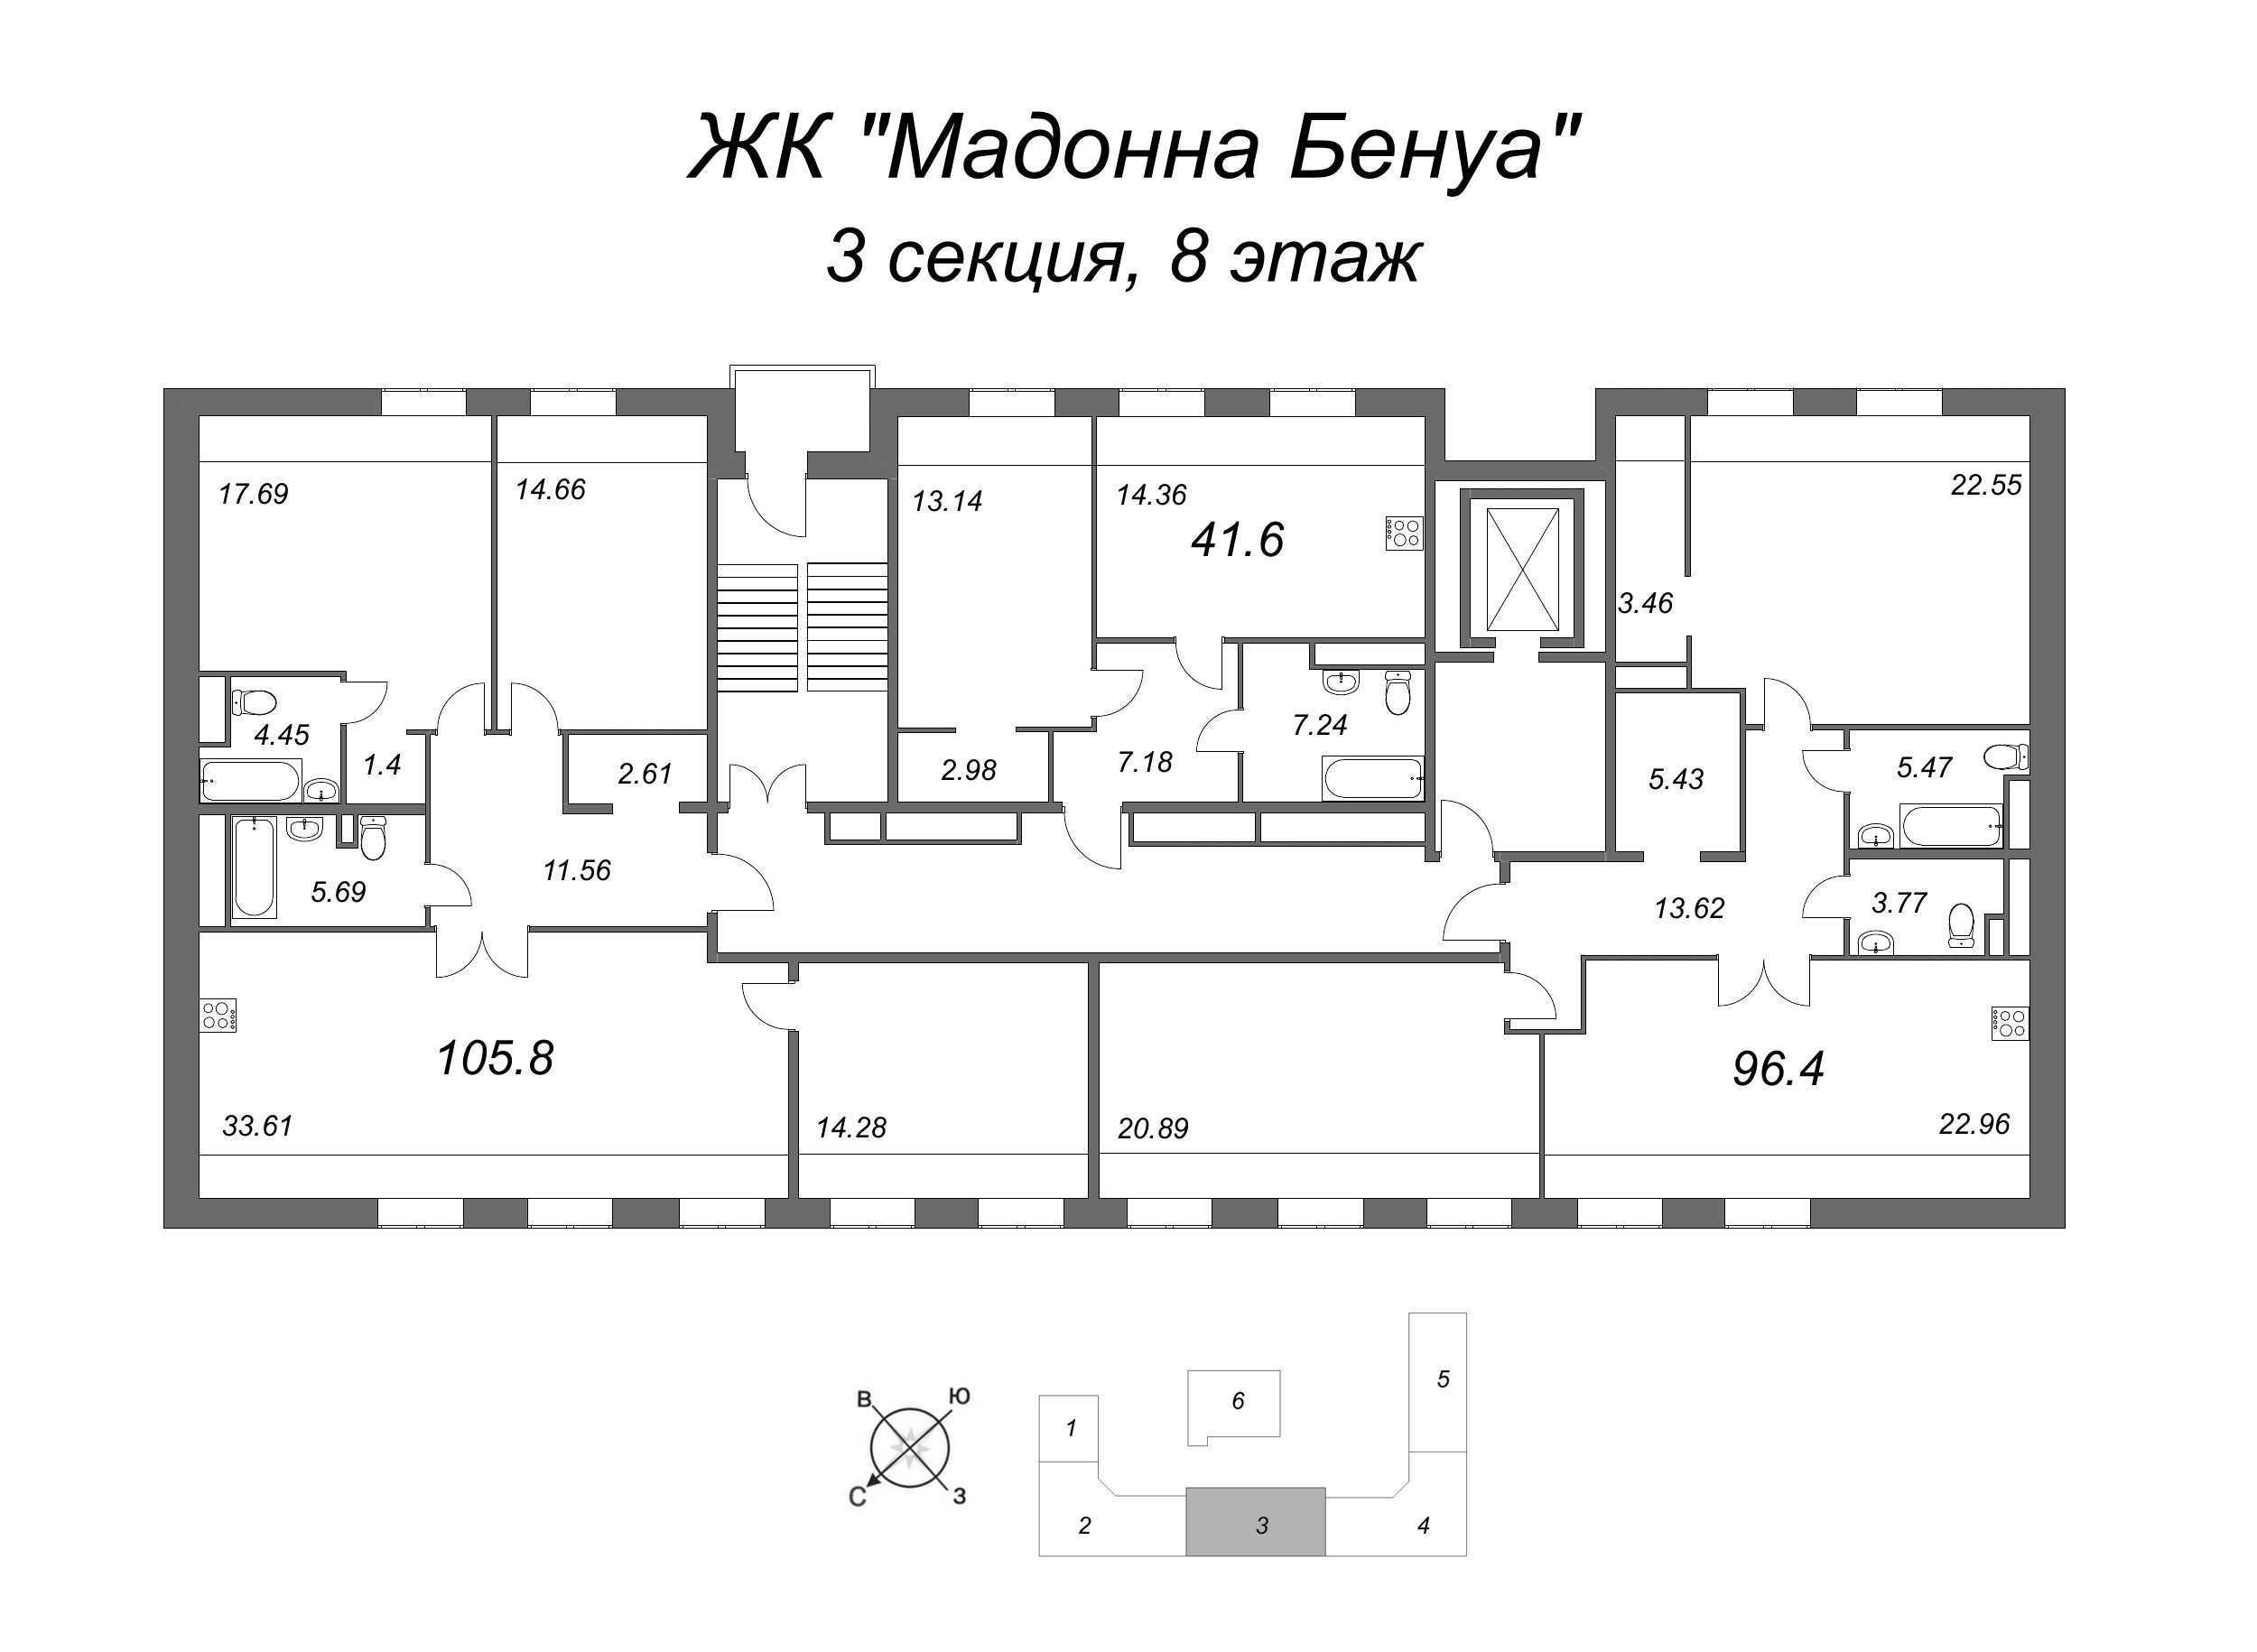 4-комнатная (Евро) квартира, 117.6 м² - планировка этажа